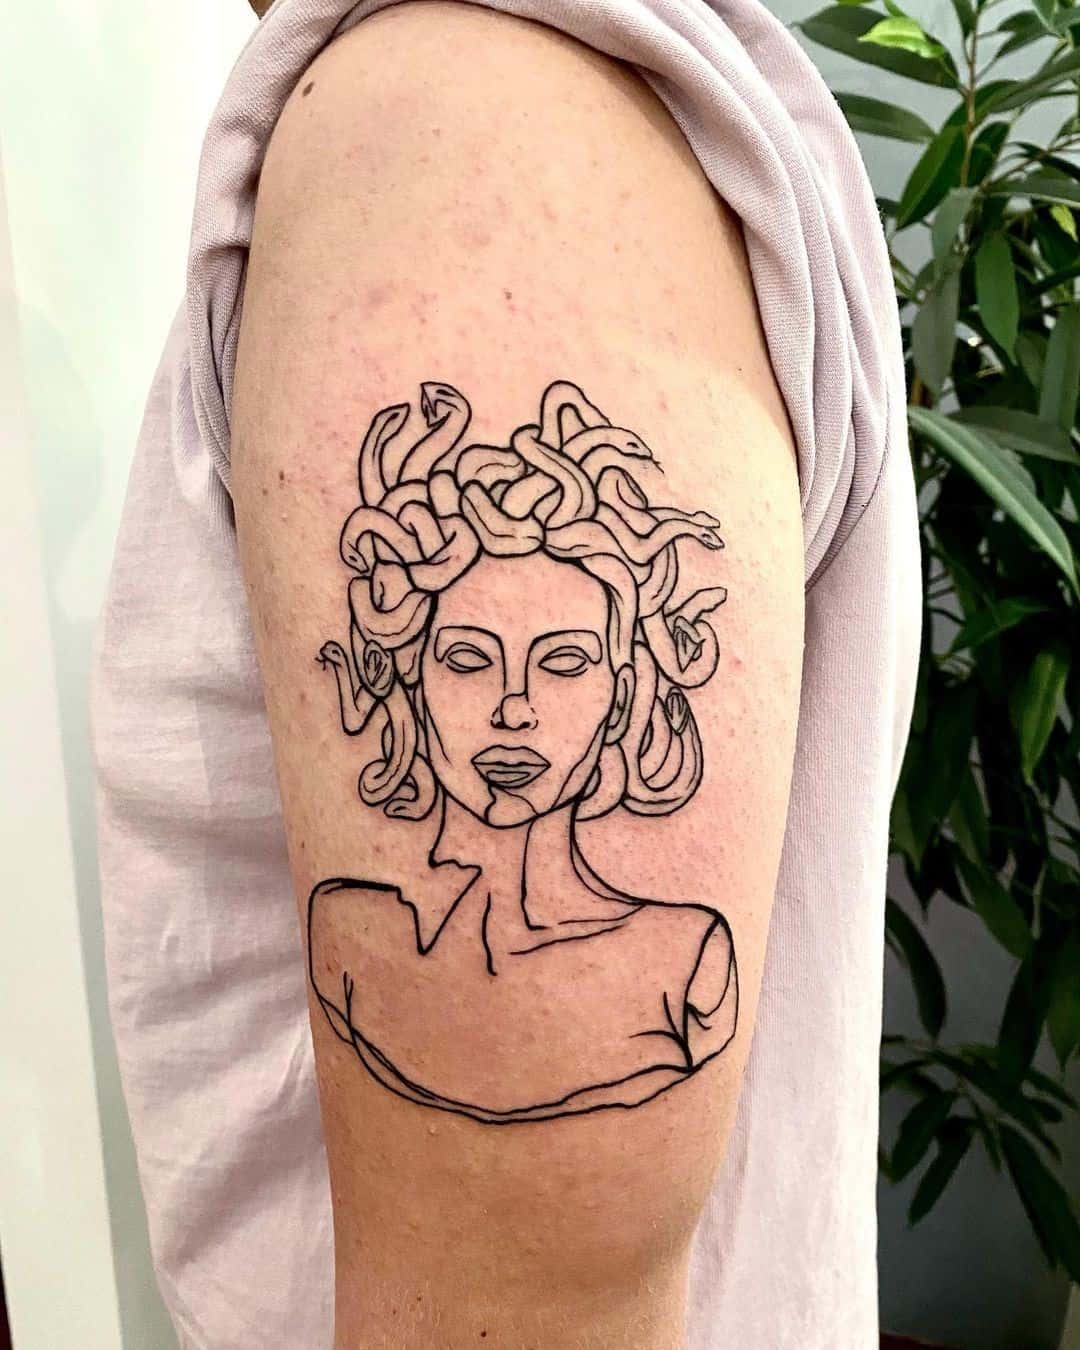 Tattoo tagged with medusa statue  inkedappcom